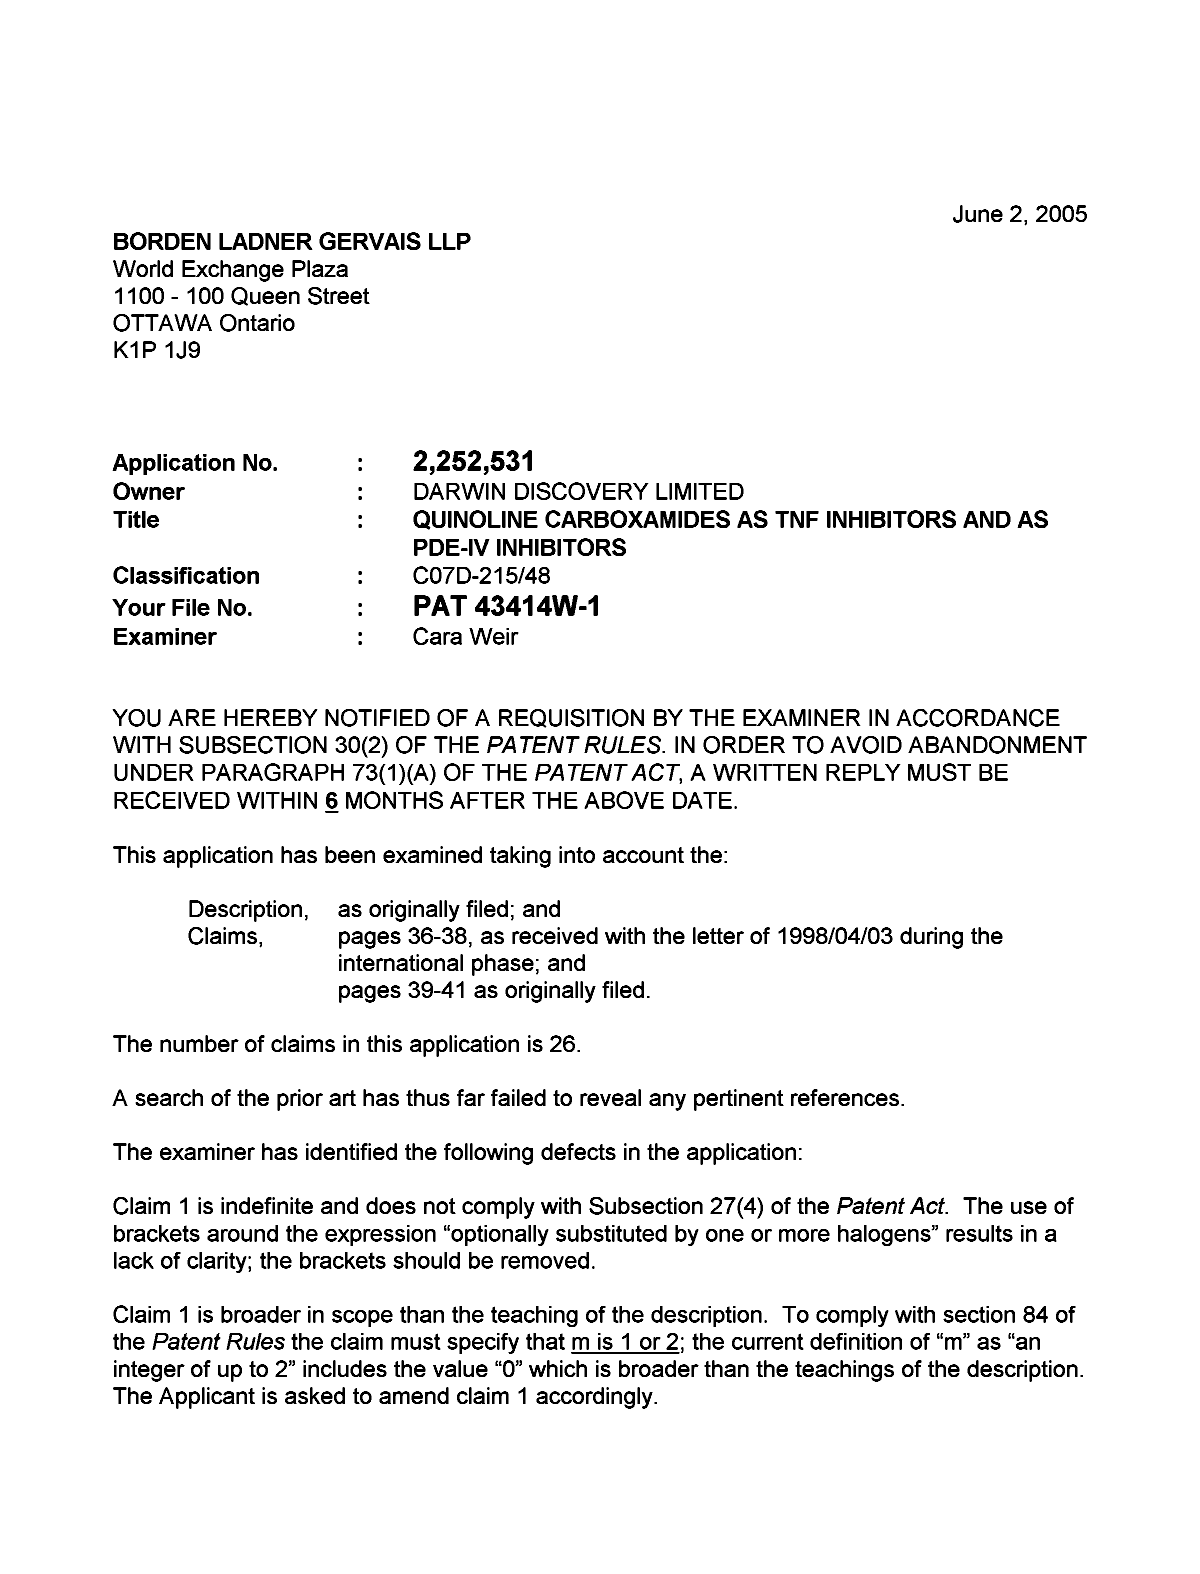 Canadian Patent Document 2252531. Prosecution-Amendment 20050602. Image 1 of 3